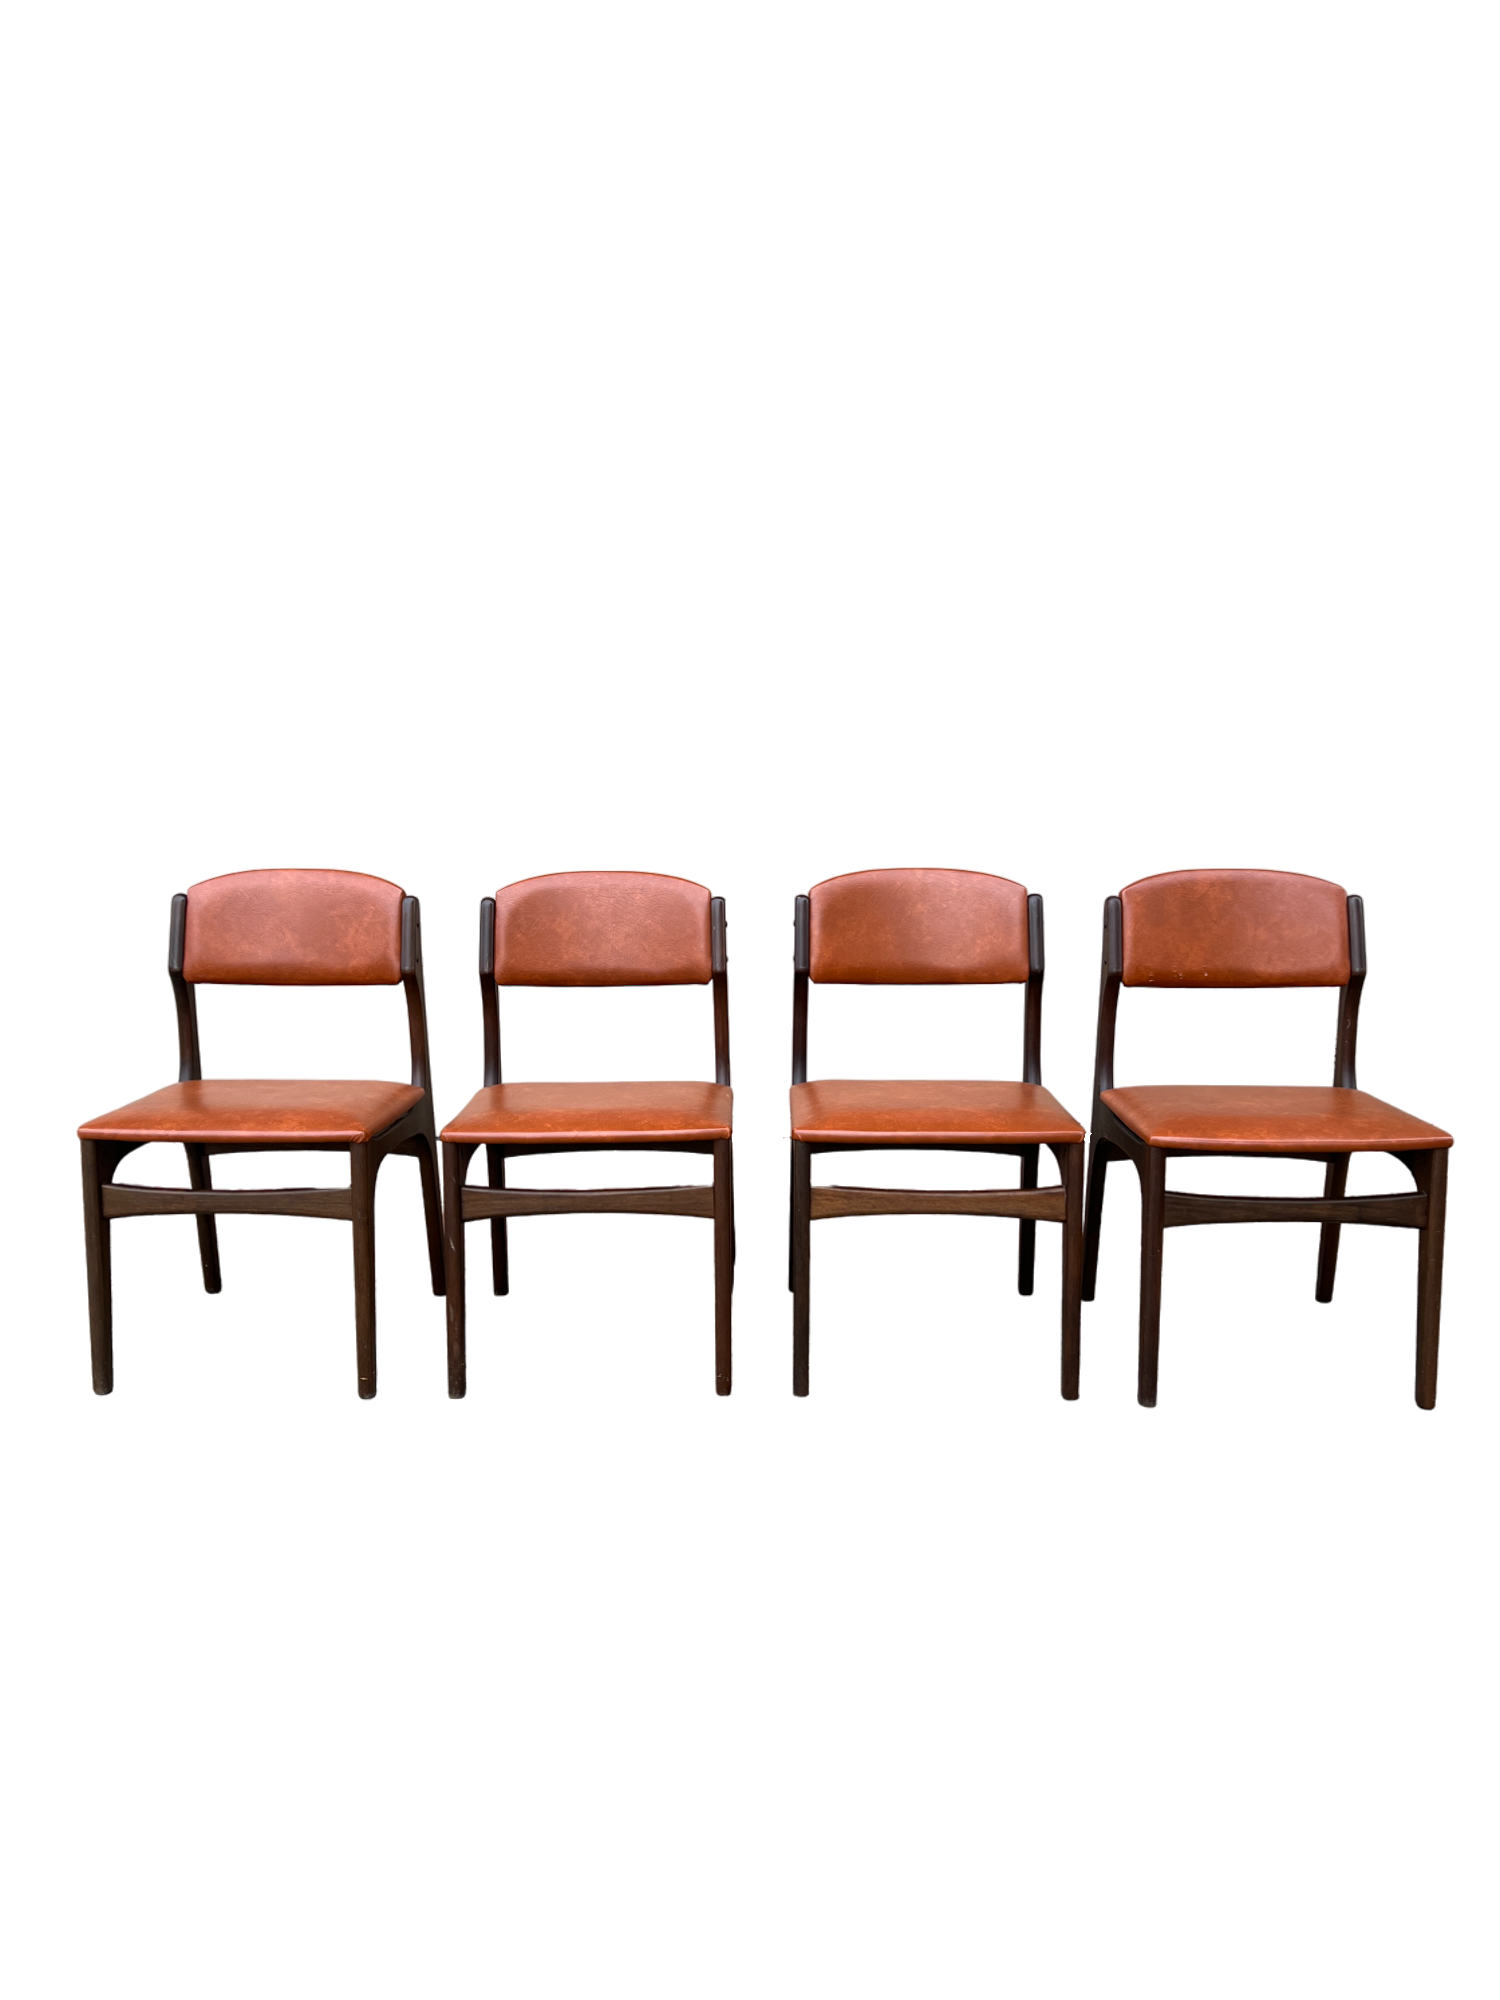 1960s Kosuga Dining Chairs, Made in Japan